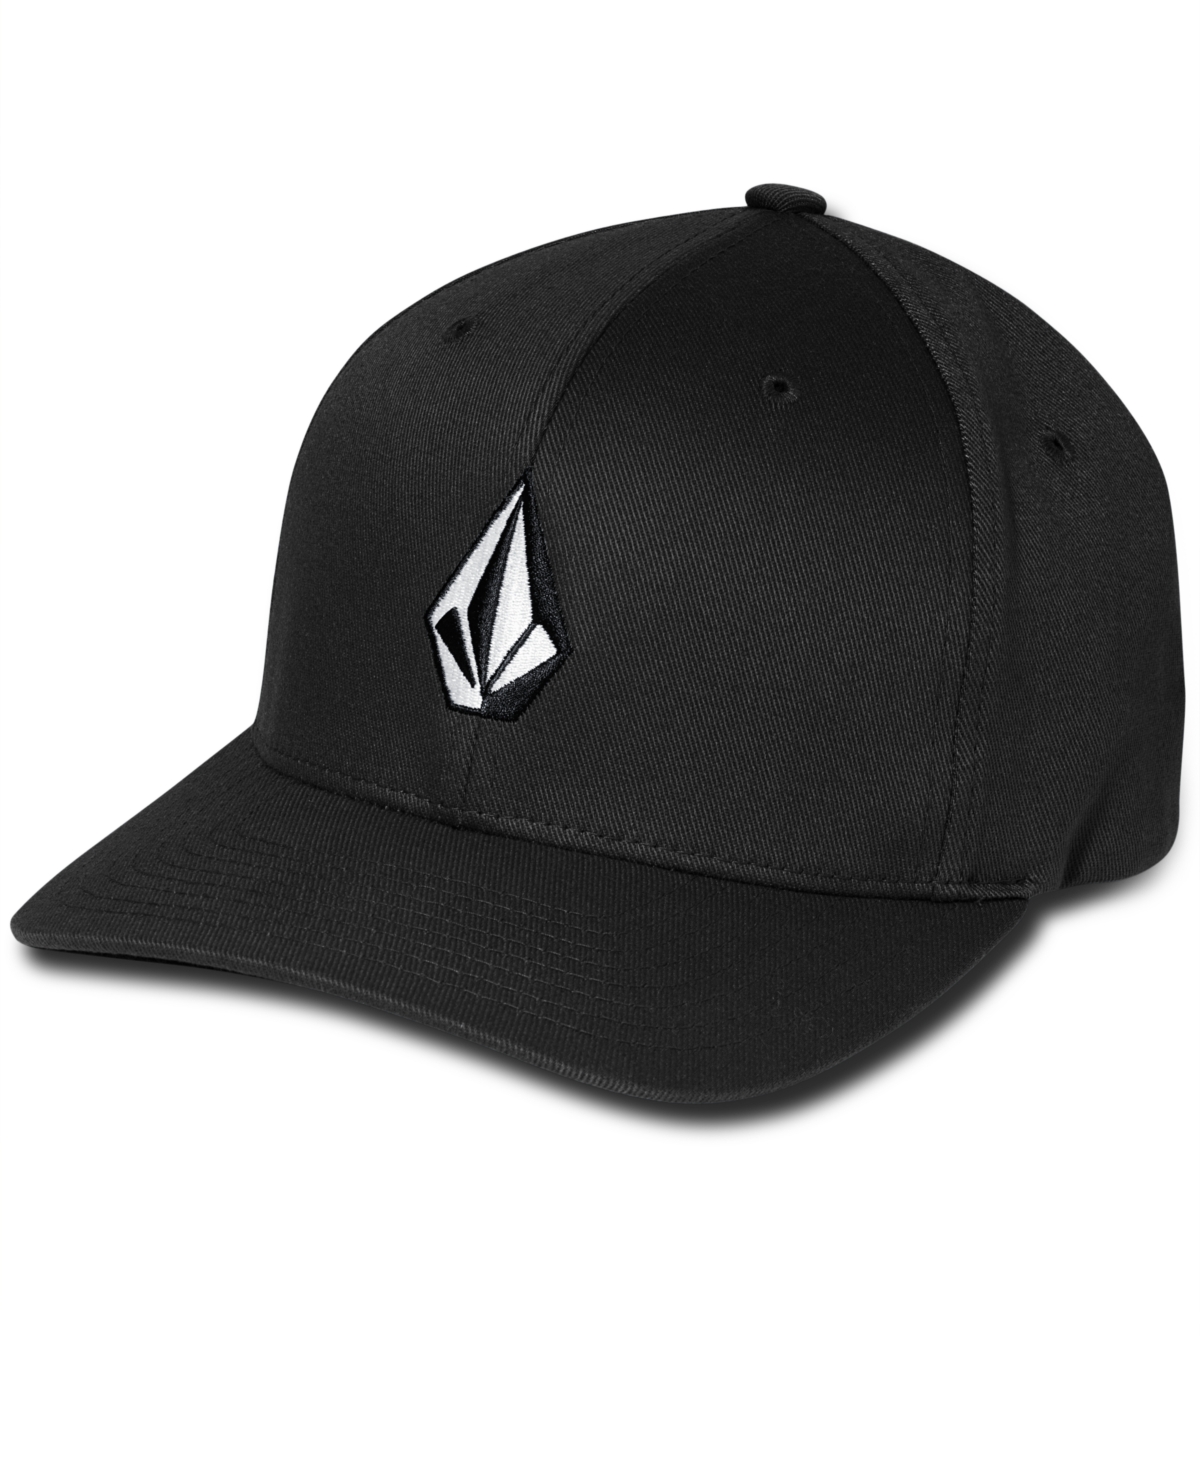 Men's Full Stone X Fit Hat - Black